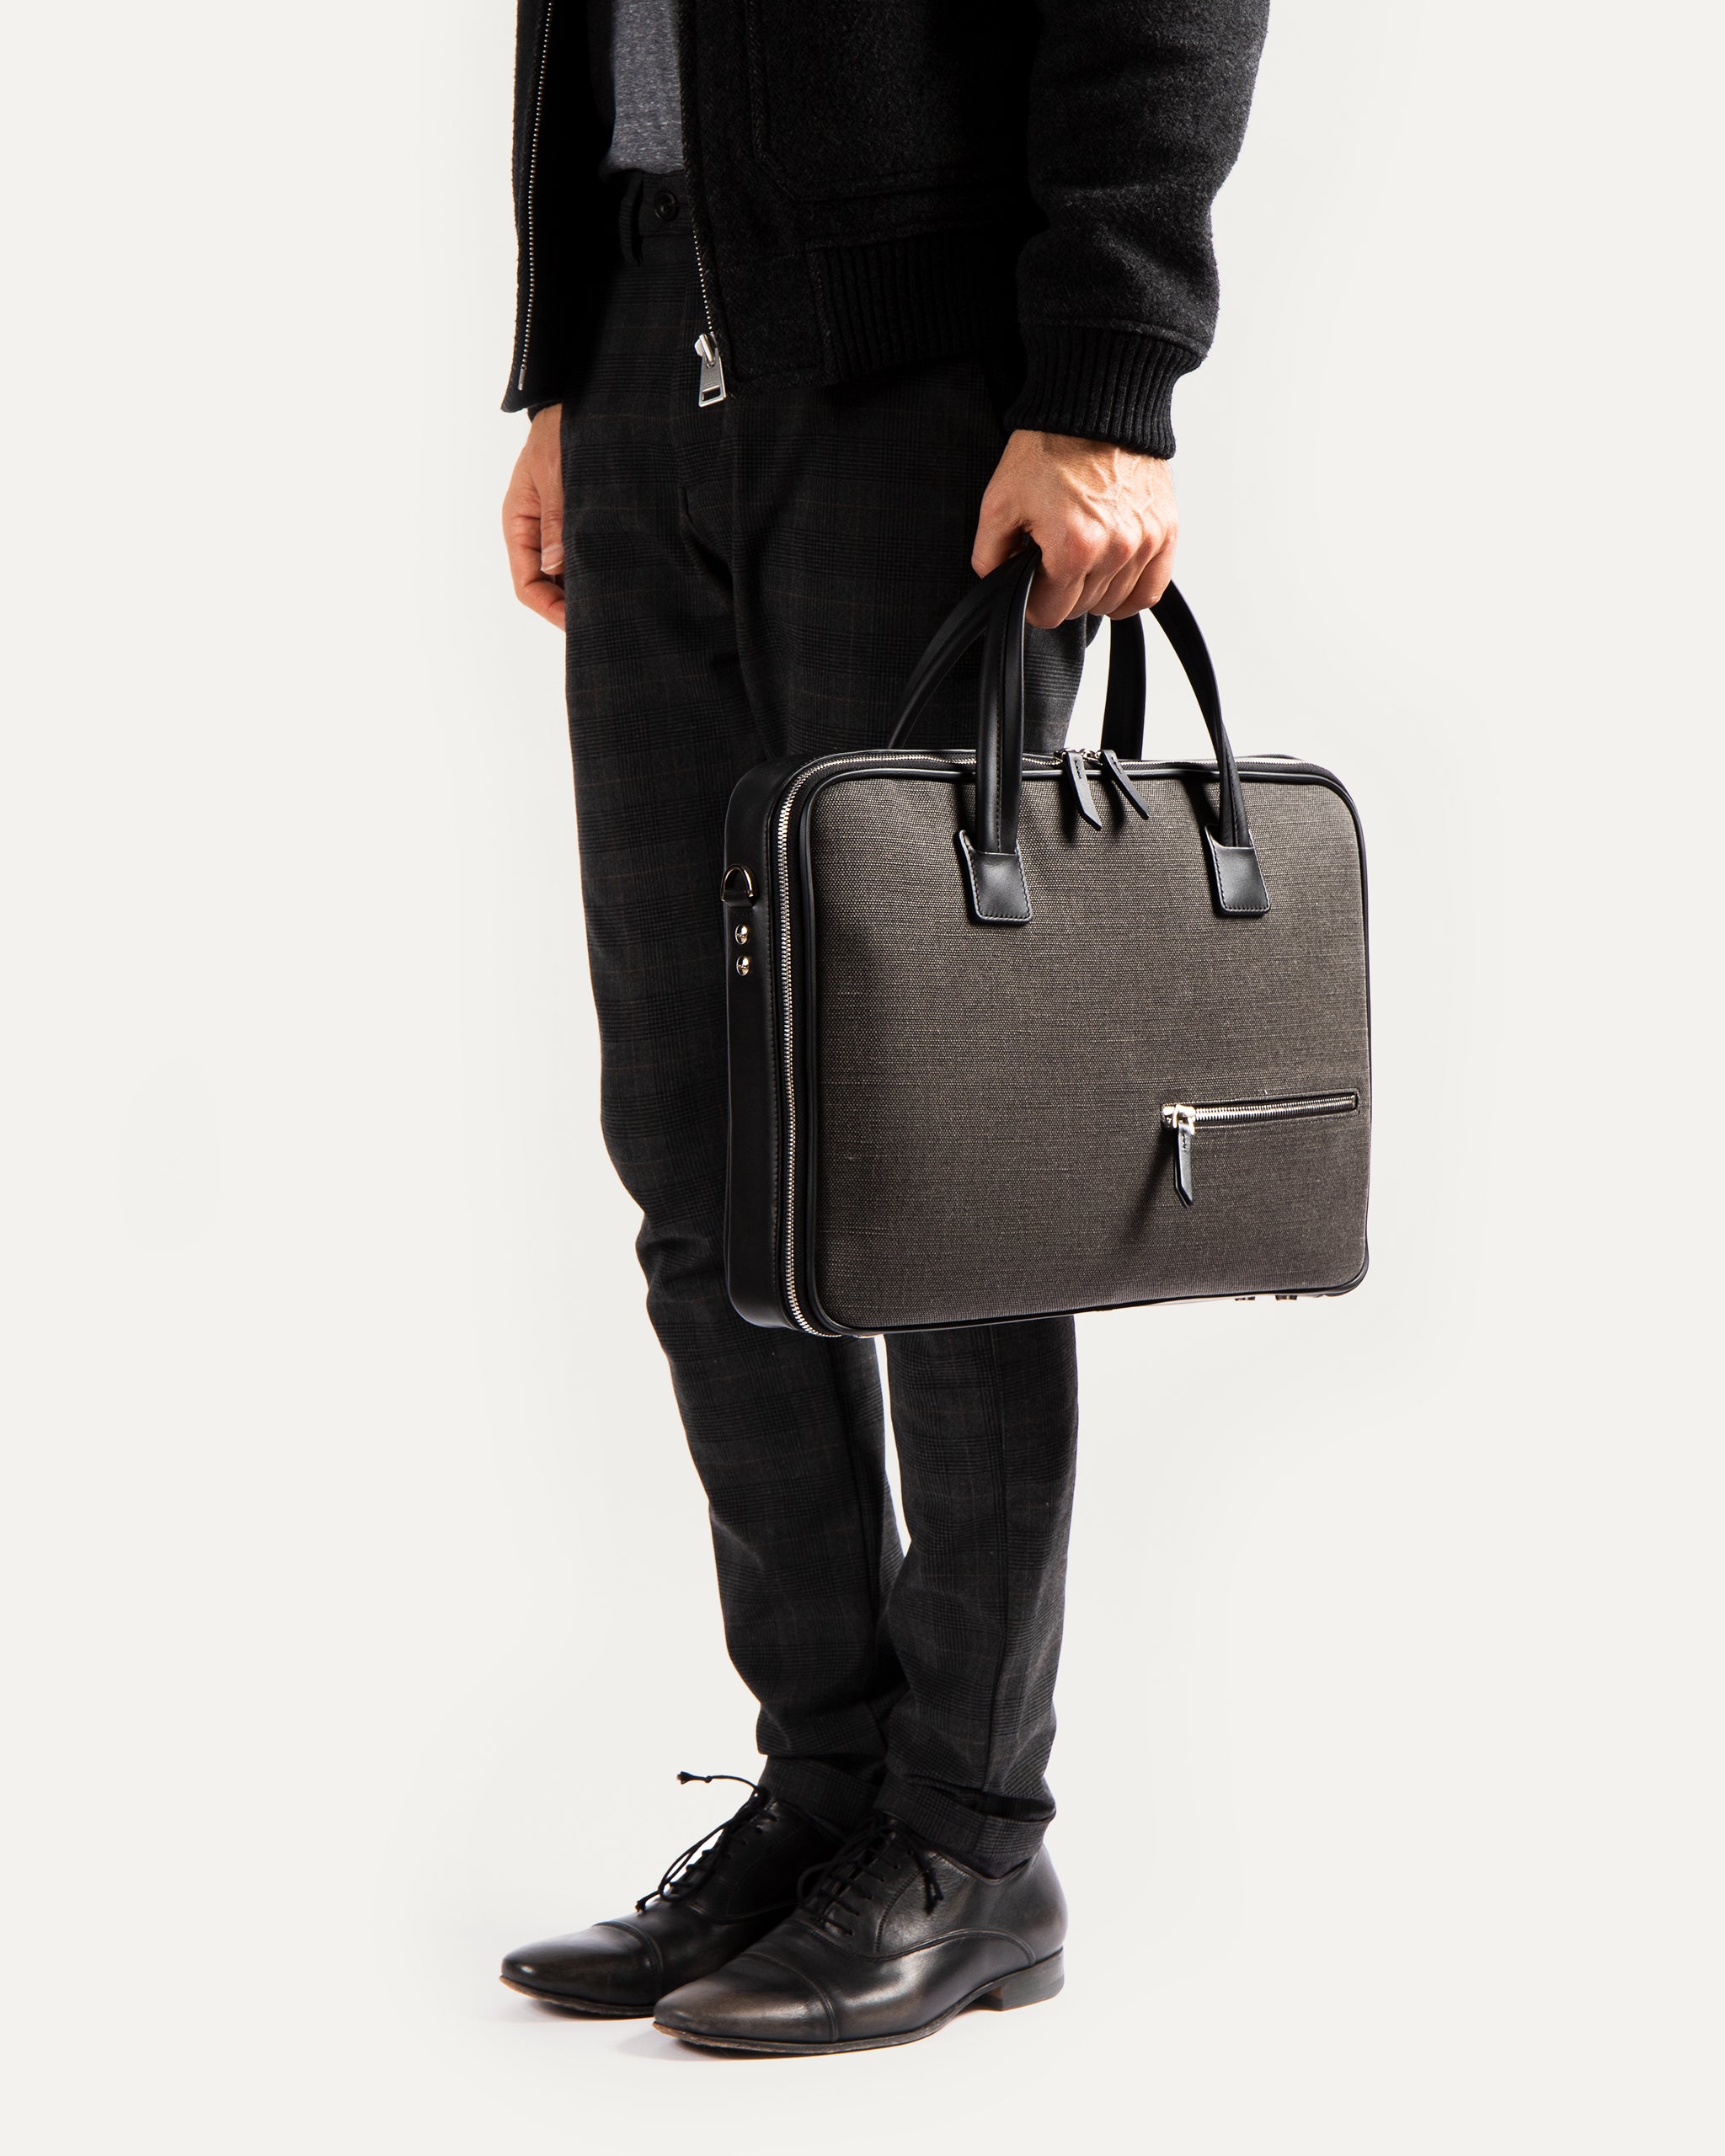 lundi Leather Briefcase | DIEGO Gray & Black